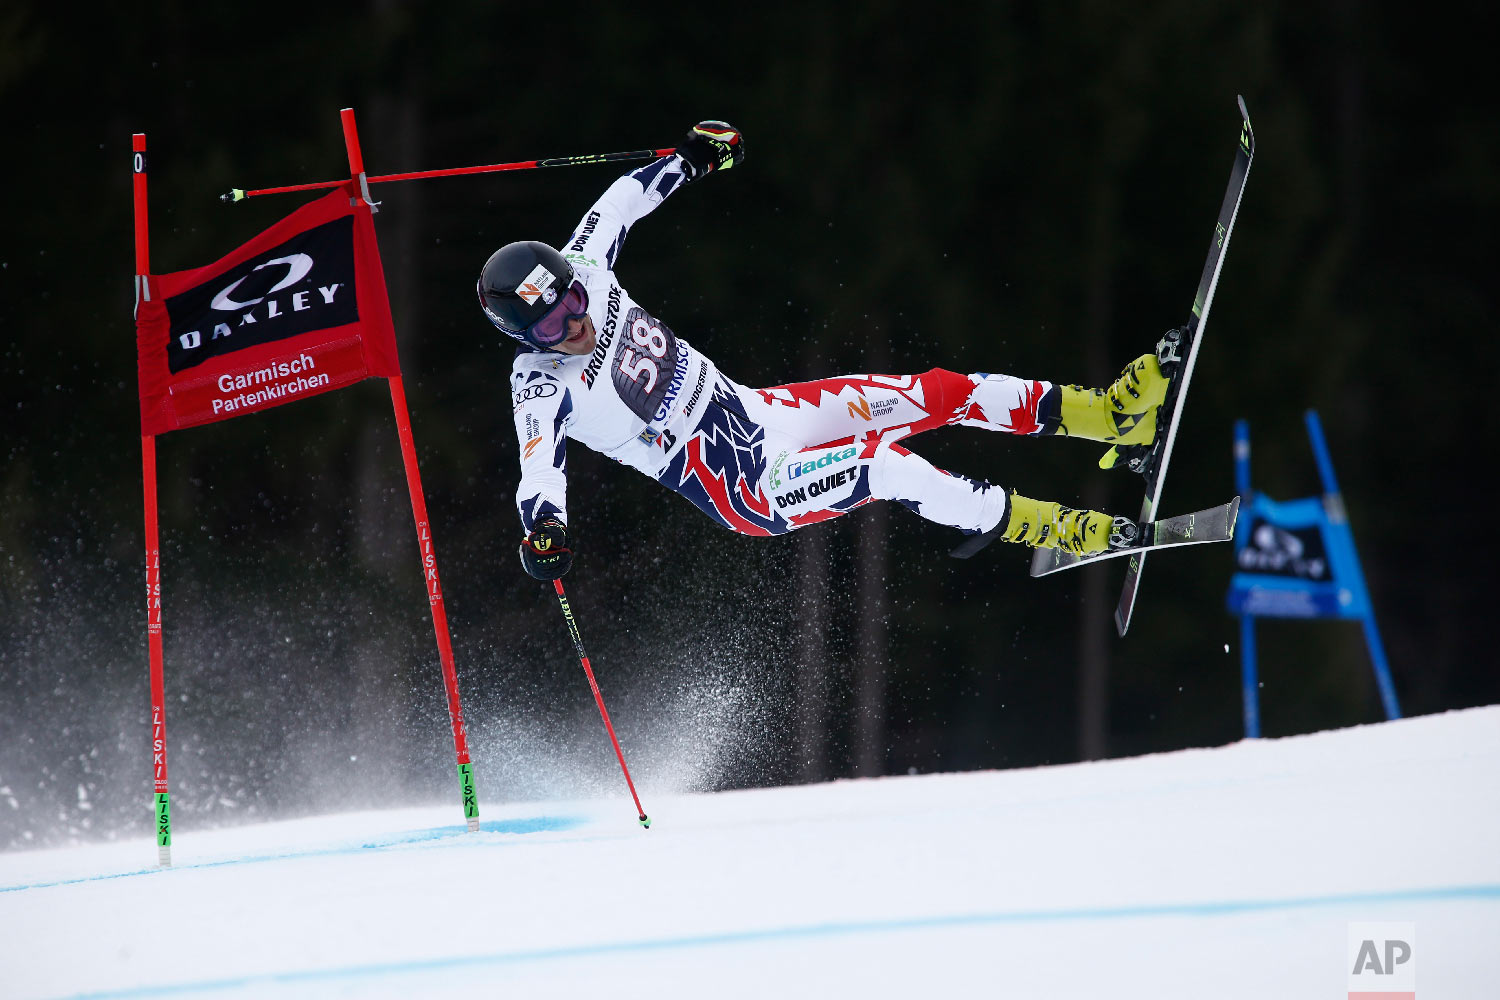  Czech Republic's Krystof Kryzl crashes during the first run of an alpine ski, men's World Cup giant slalom, in Garmisch Partenkirchen, Germany on Jan. 28, 2018. (AP Photo/Giovanni Auletta) 